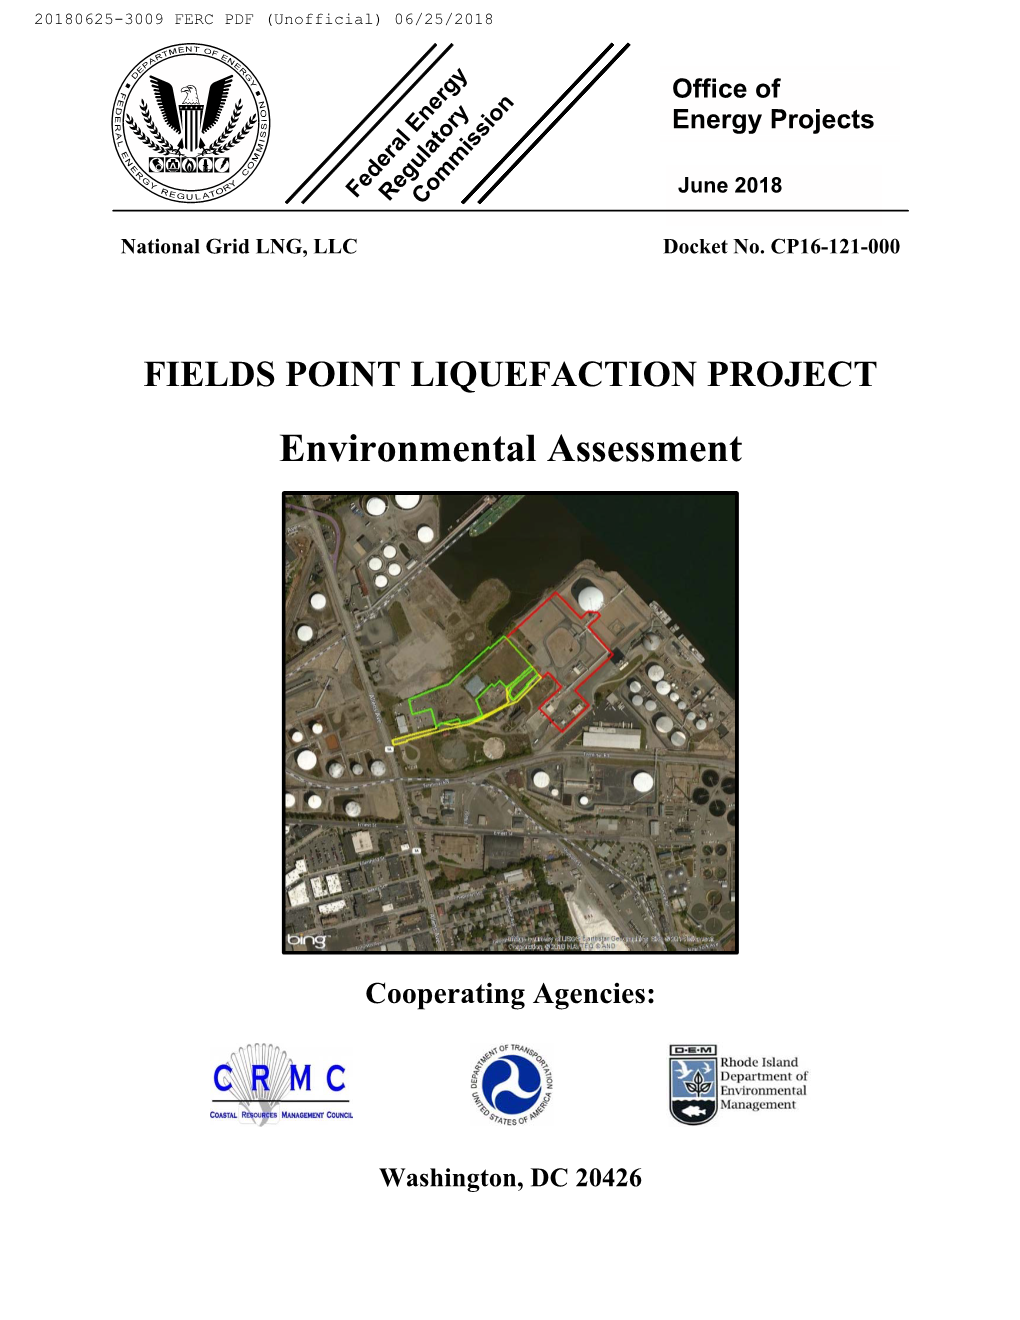 FIELDS POINT LIQUEFACTION PROJECT Environmental Assessment